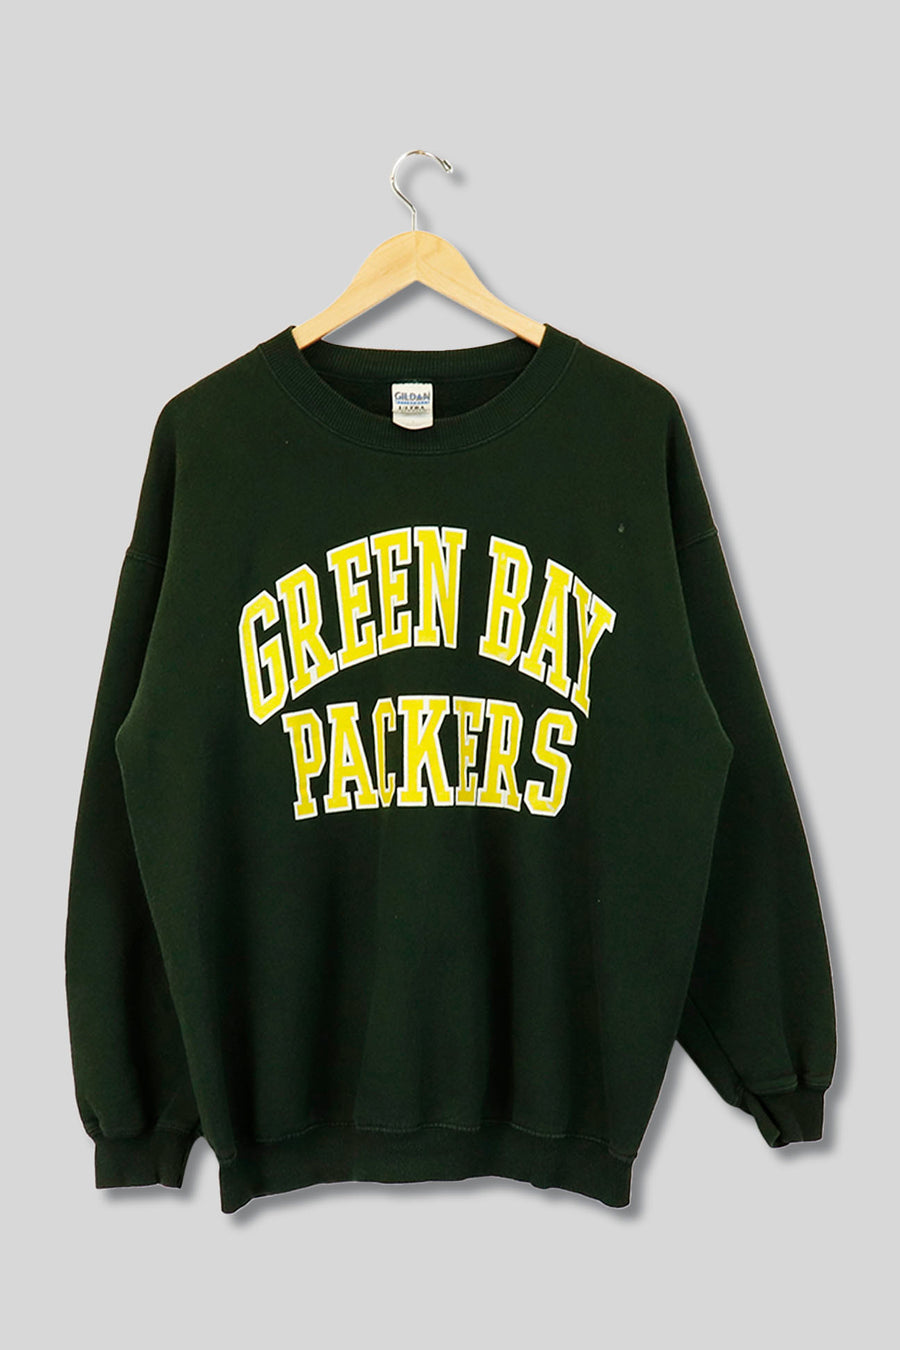 Vintage NFL Green Bay Packers Crewneck Sweatshirt Sz L